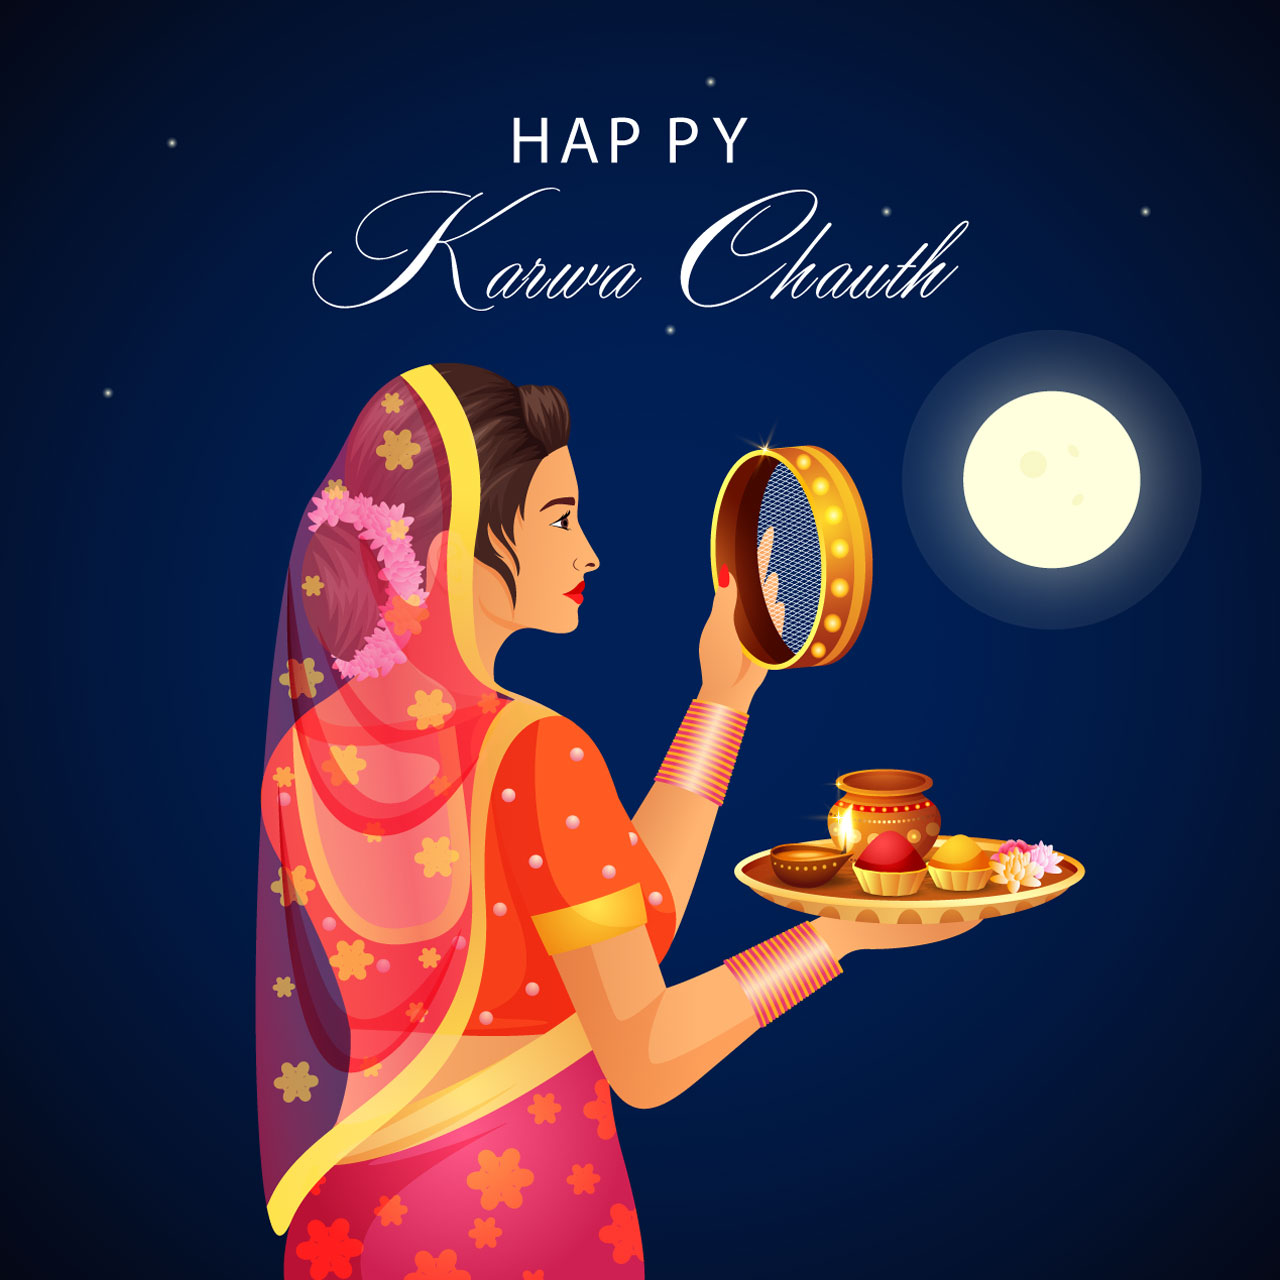 Indian clipart hand drawing sketch happy karwa chouth cartoon illustration image